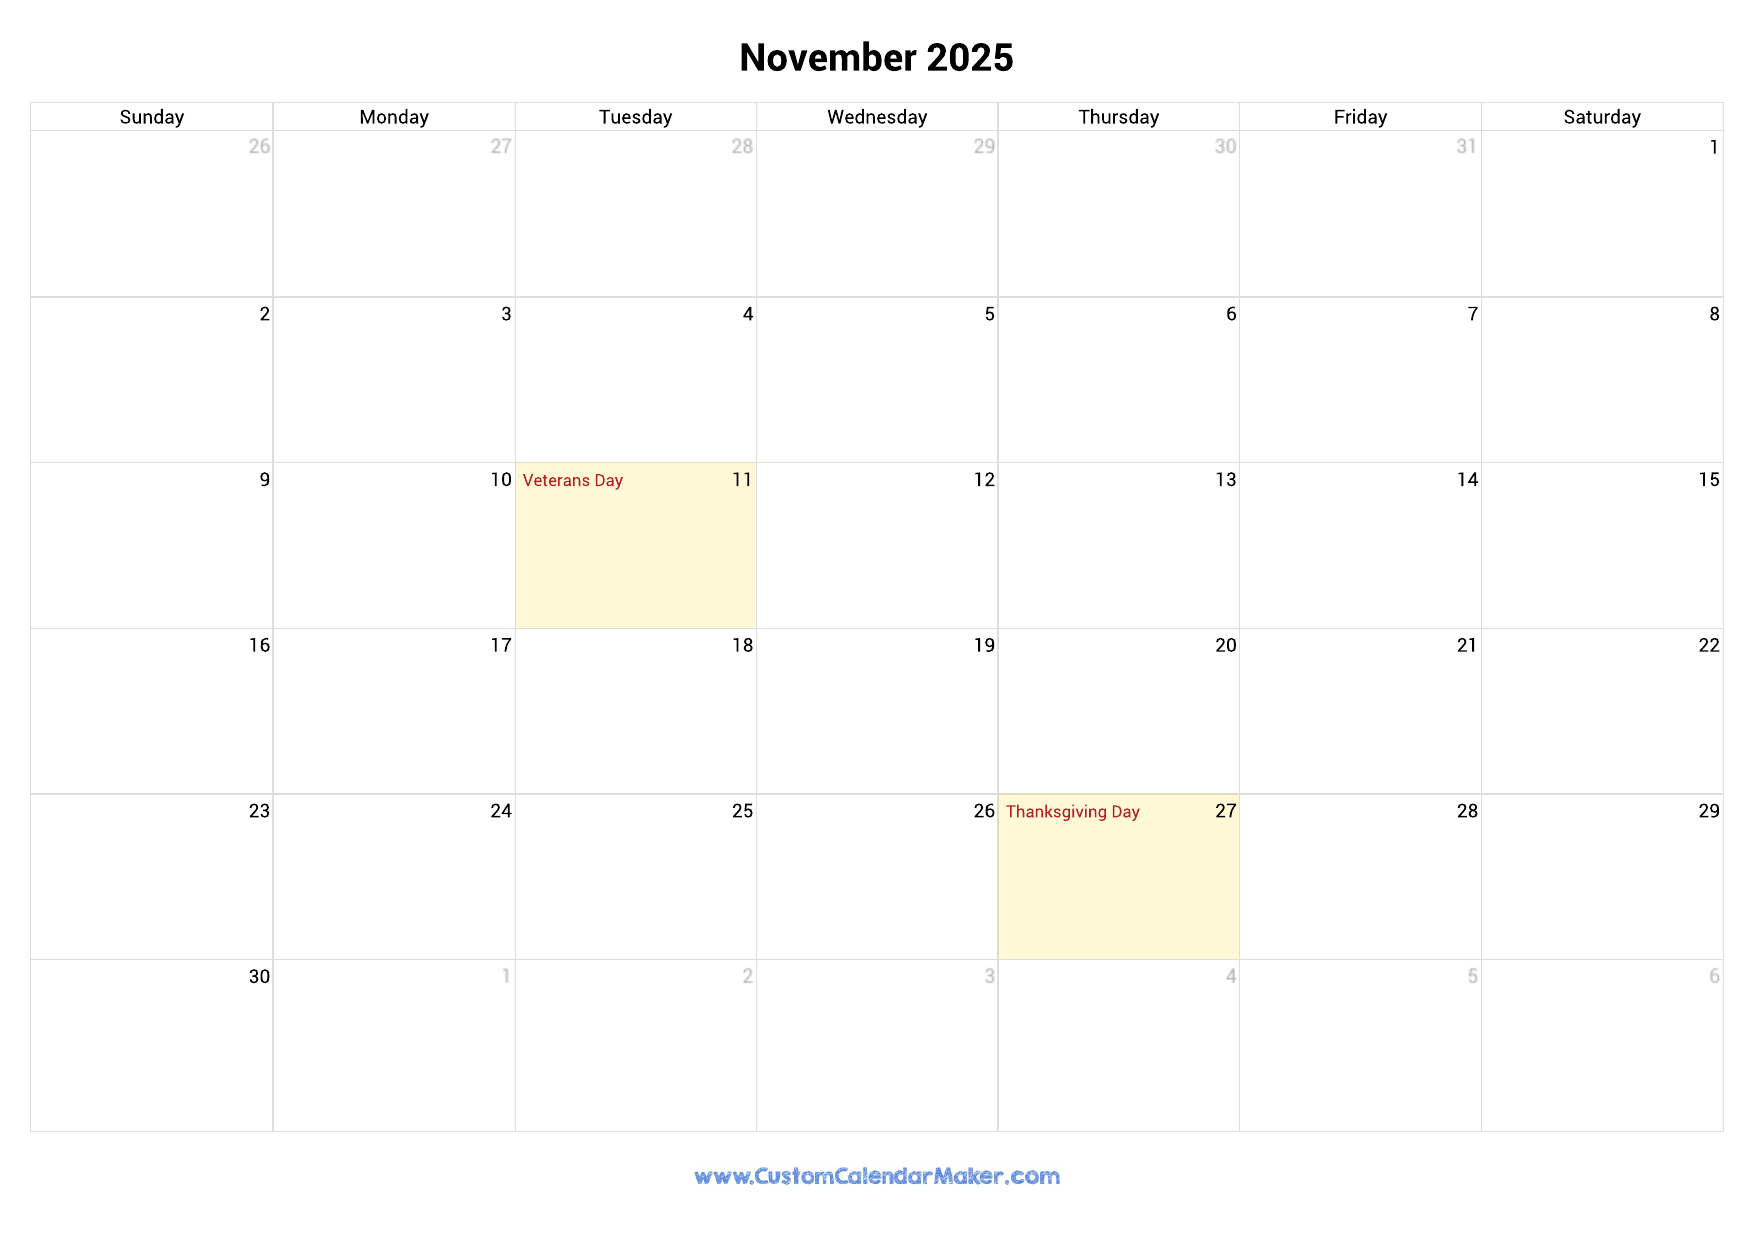 November 2025 Printable Calendar With US Federal Holidays